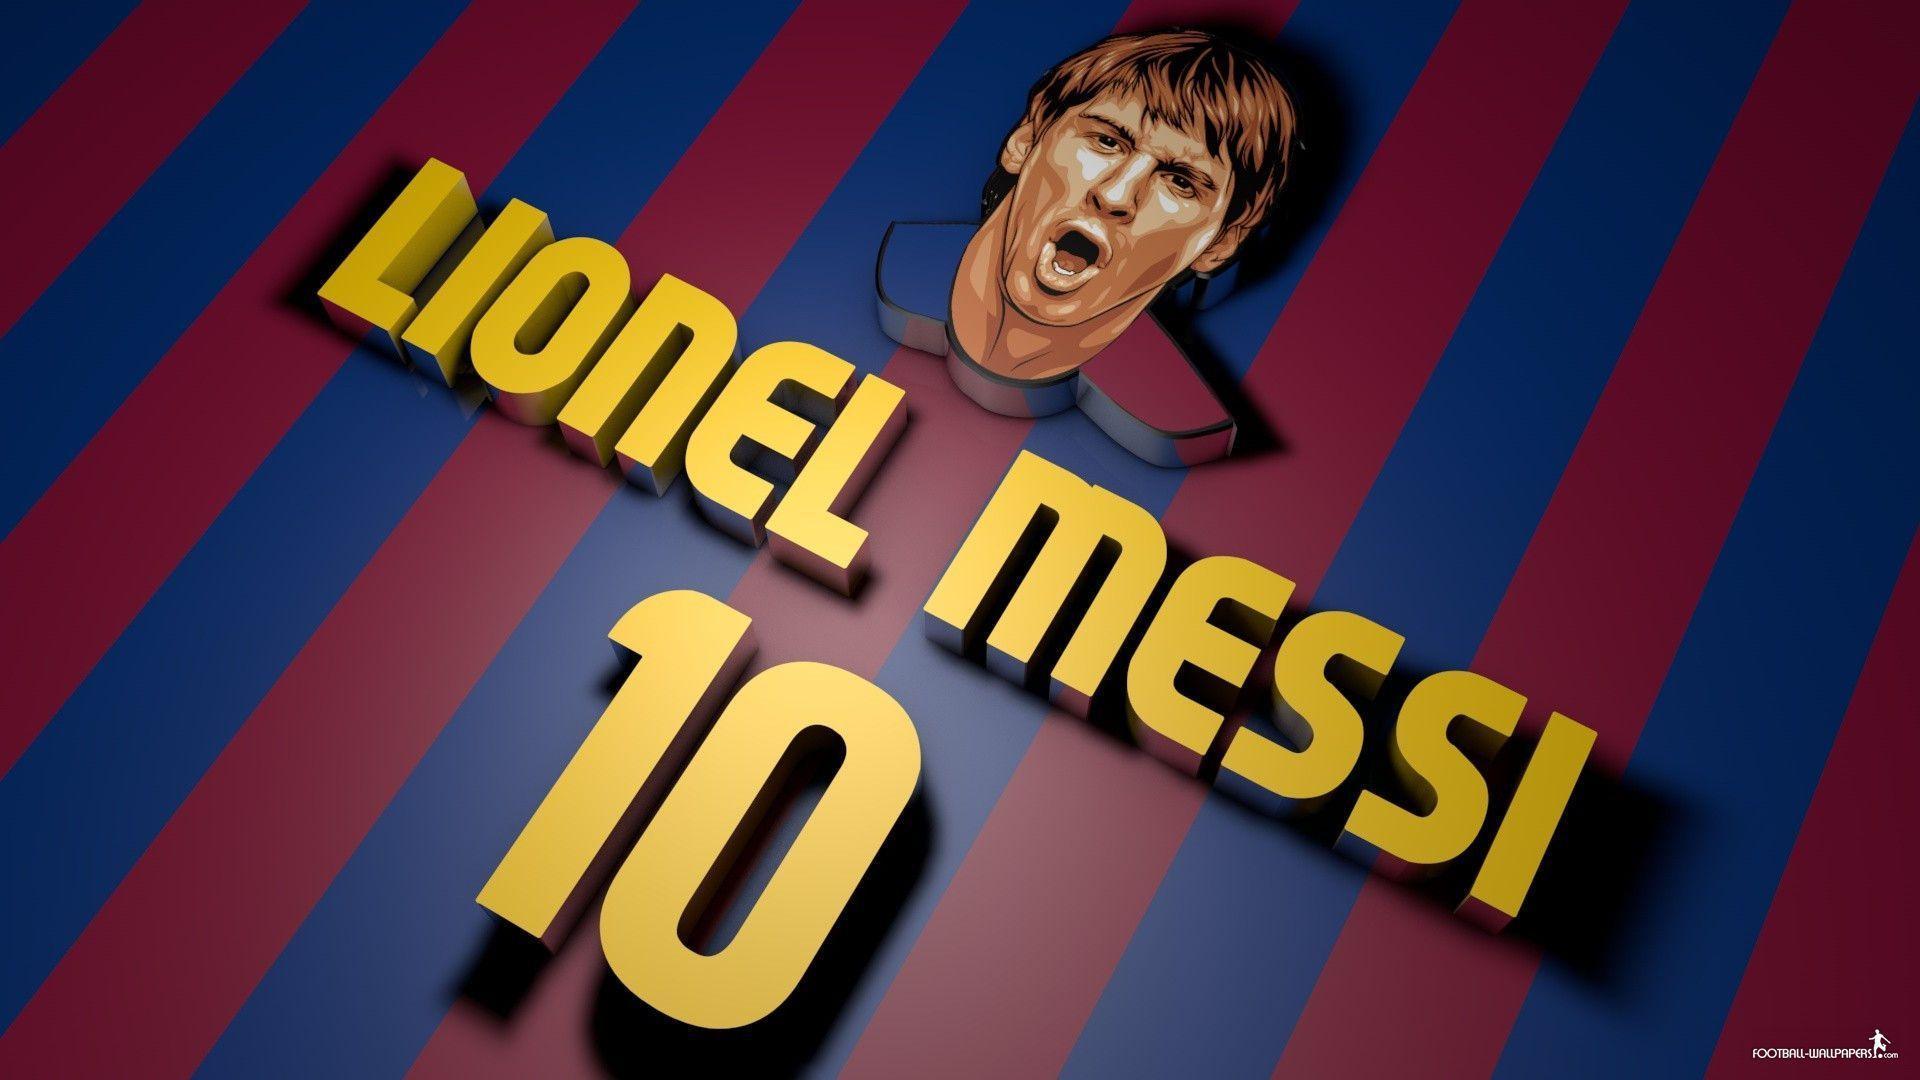 Messi HD Football Wallpaper